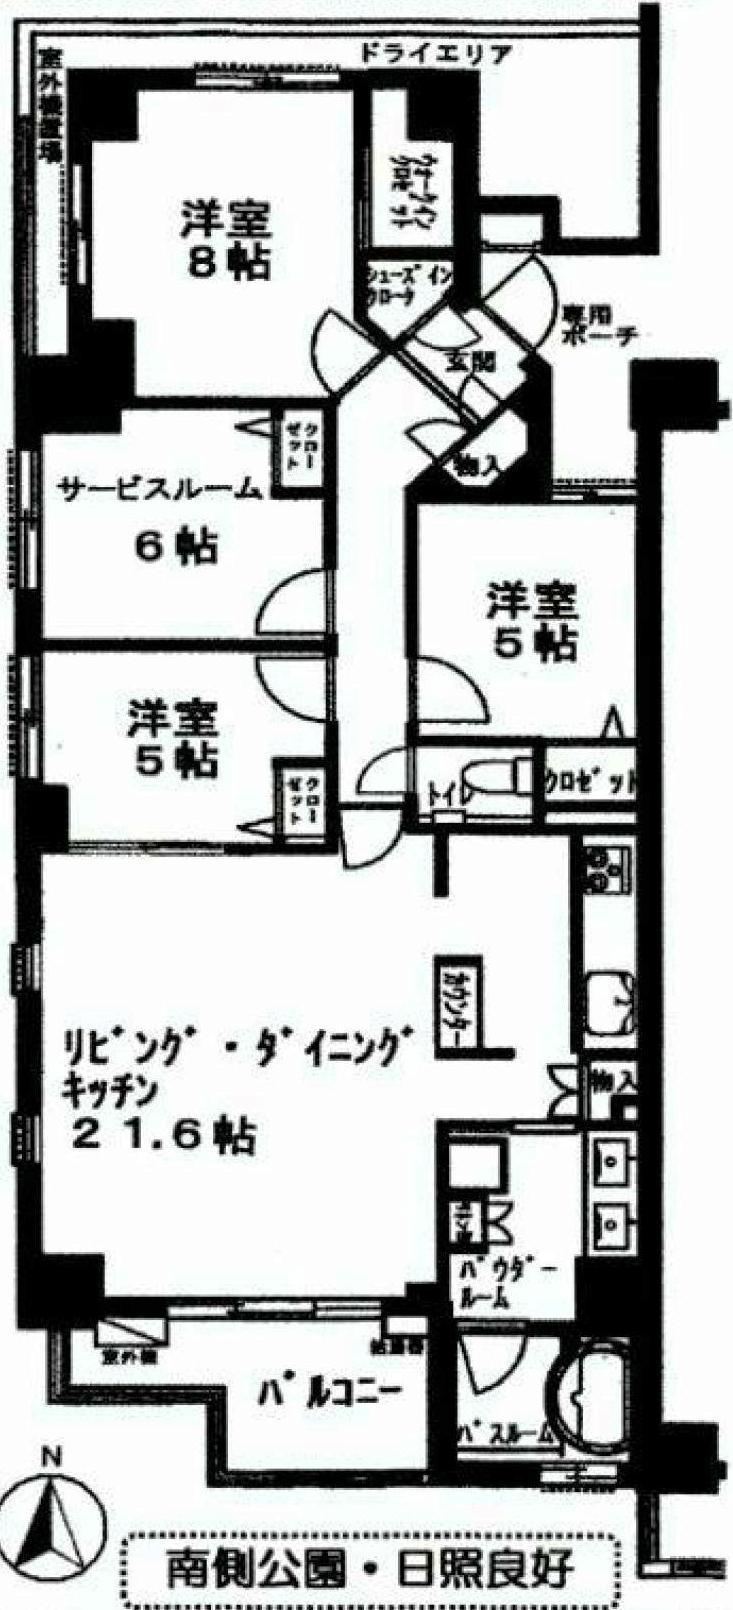 Floor plan. 3LDK + S (storeroom), Price 26,900,000 yen, The area occupied 101.6 sq m , Balcony area 7.16 sq m large 4LDK